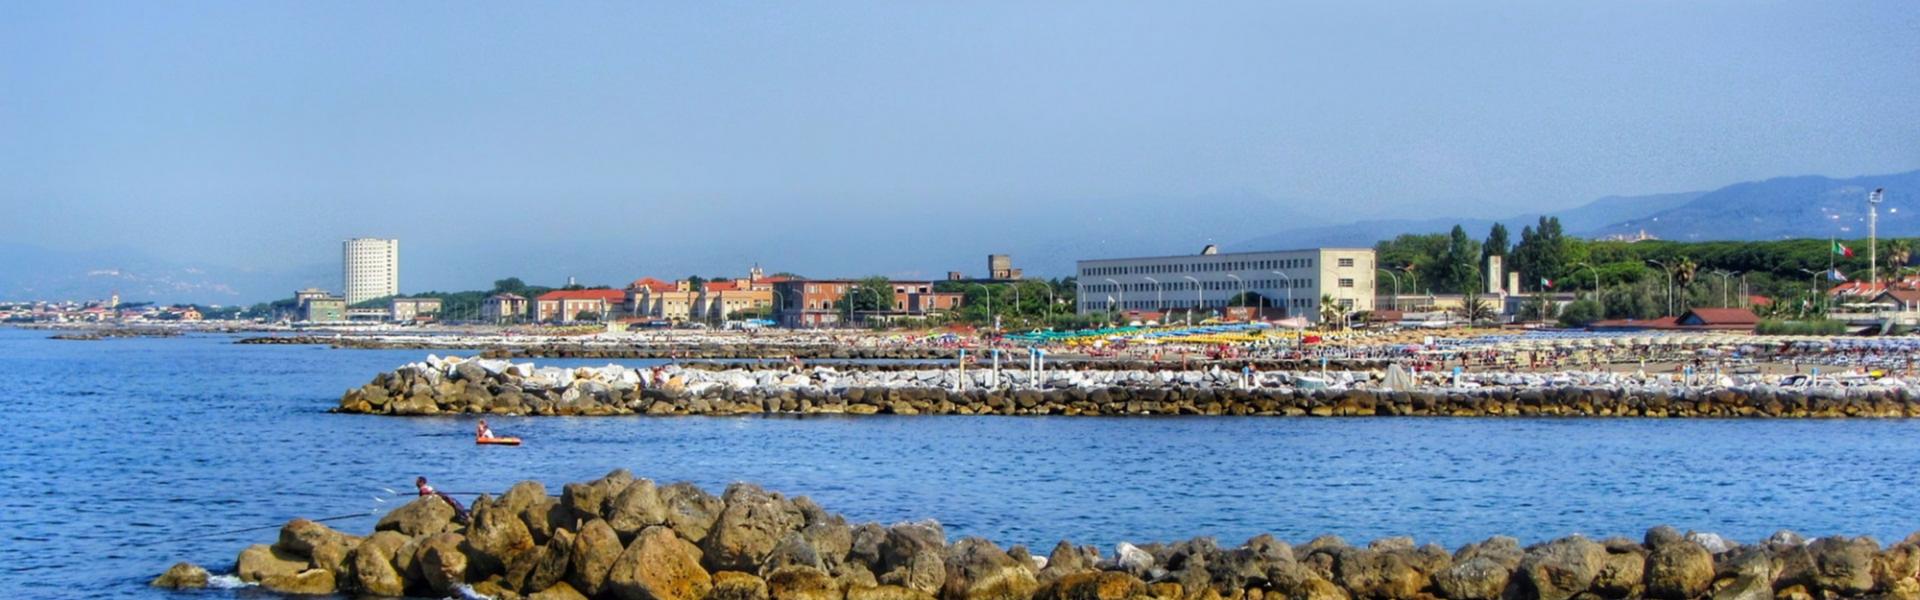 Marina di Massa affittare case vacanze - Casamundo